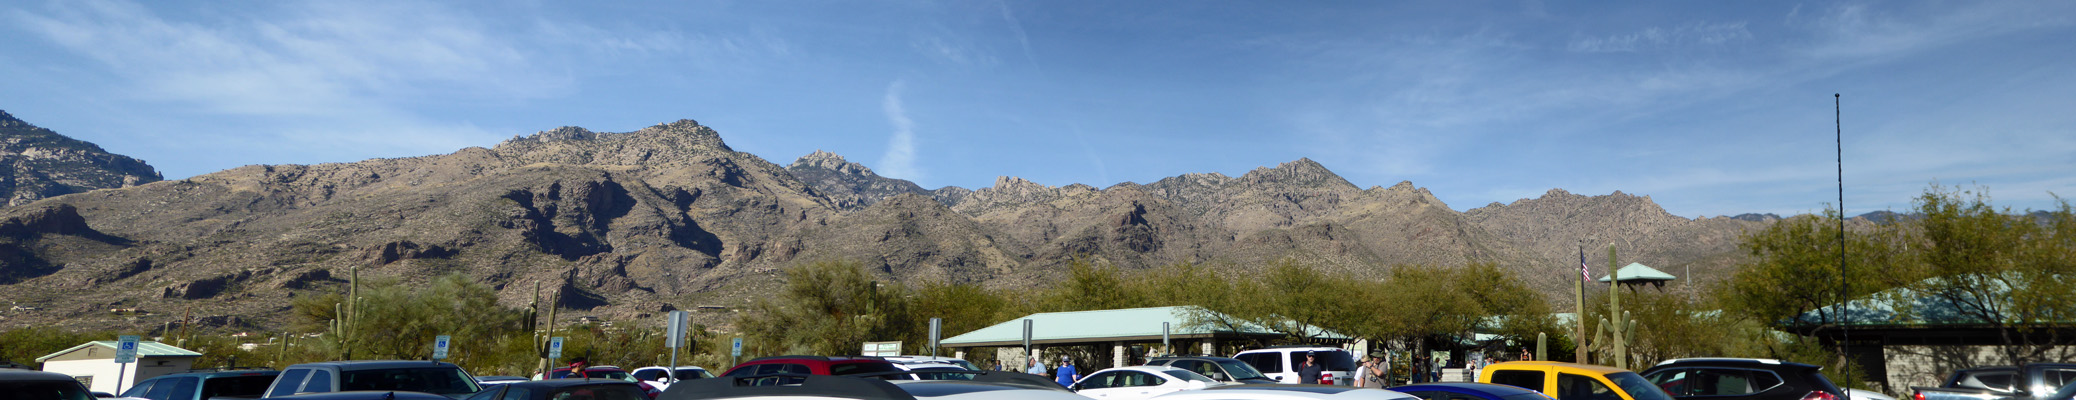 Sabino Canyon parking lot view